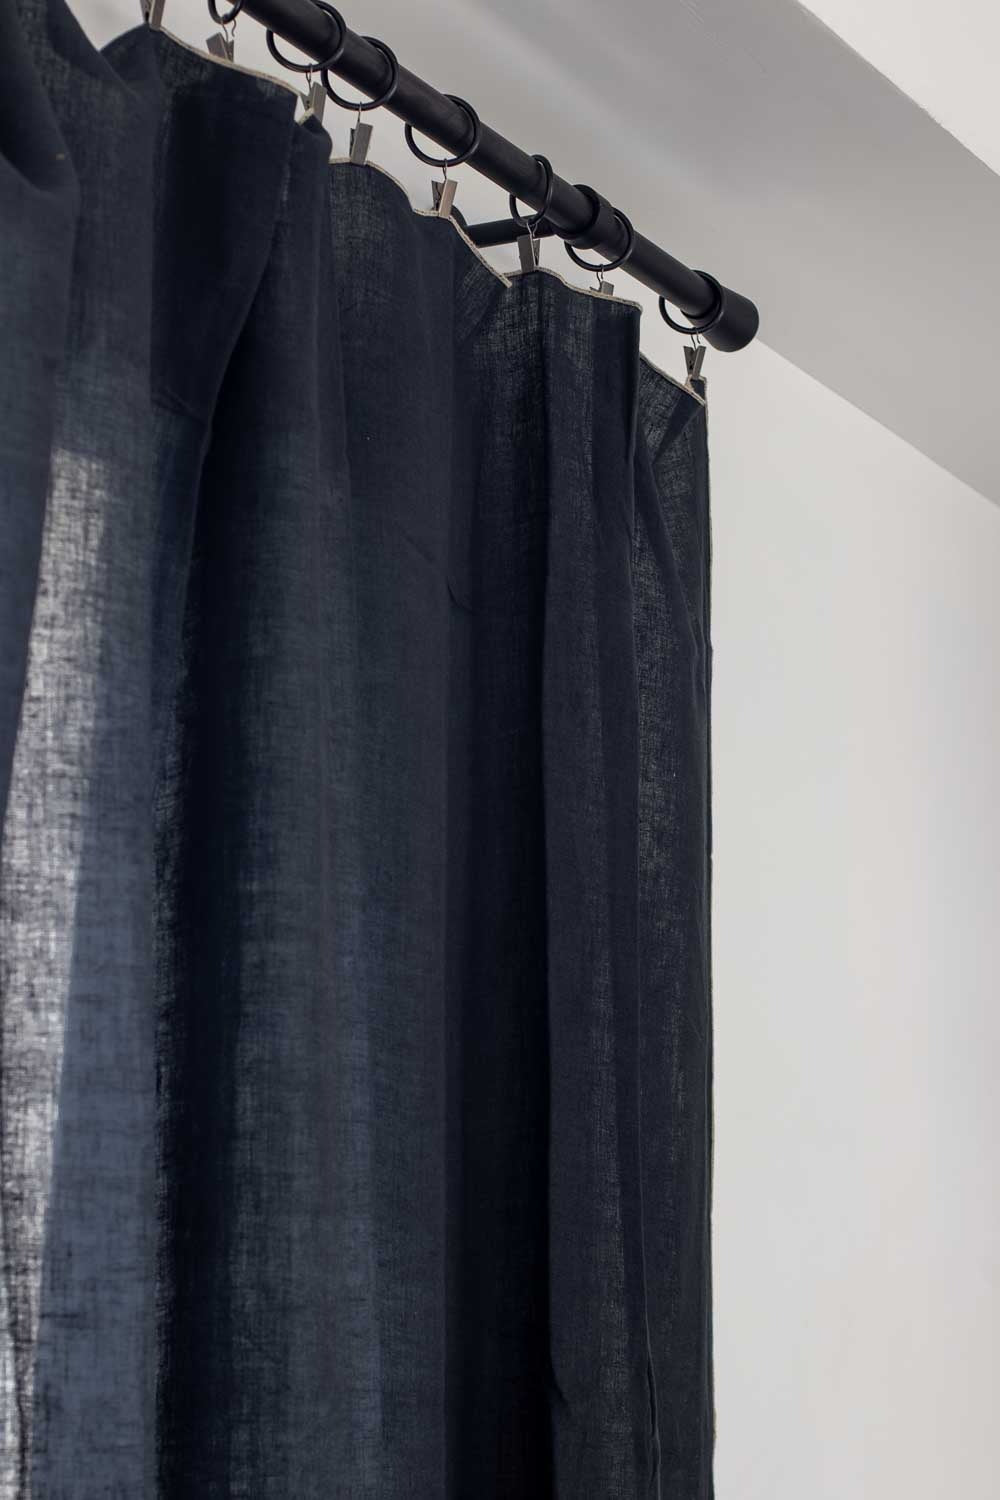 Rideau en lin lavé Venise -160x250 cm - Harmony Haomy, 160*250 cm / Noir